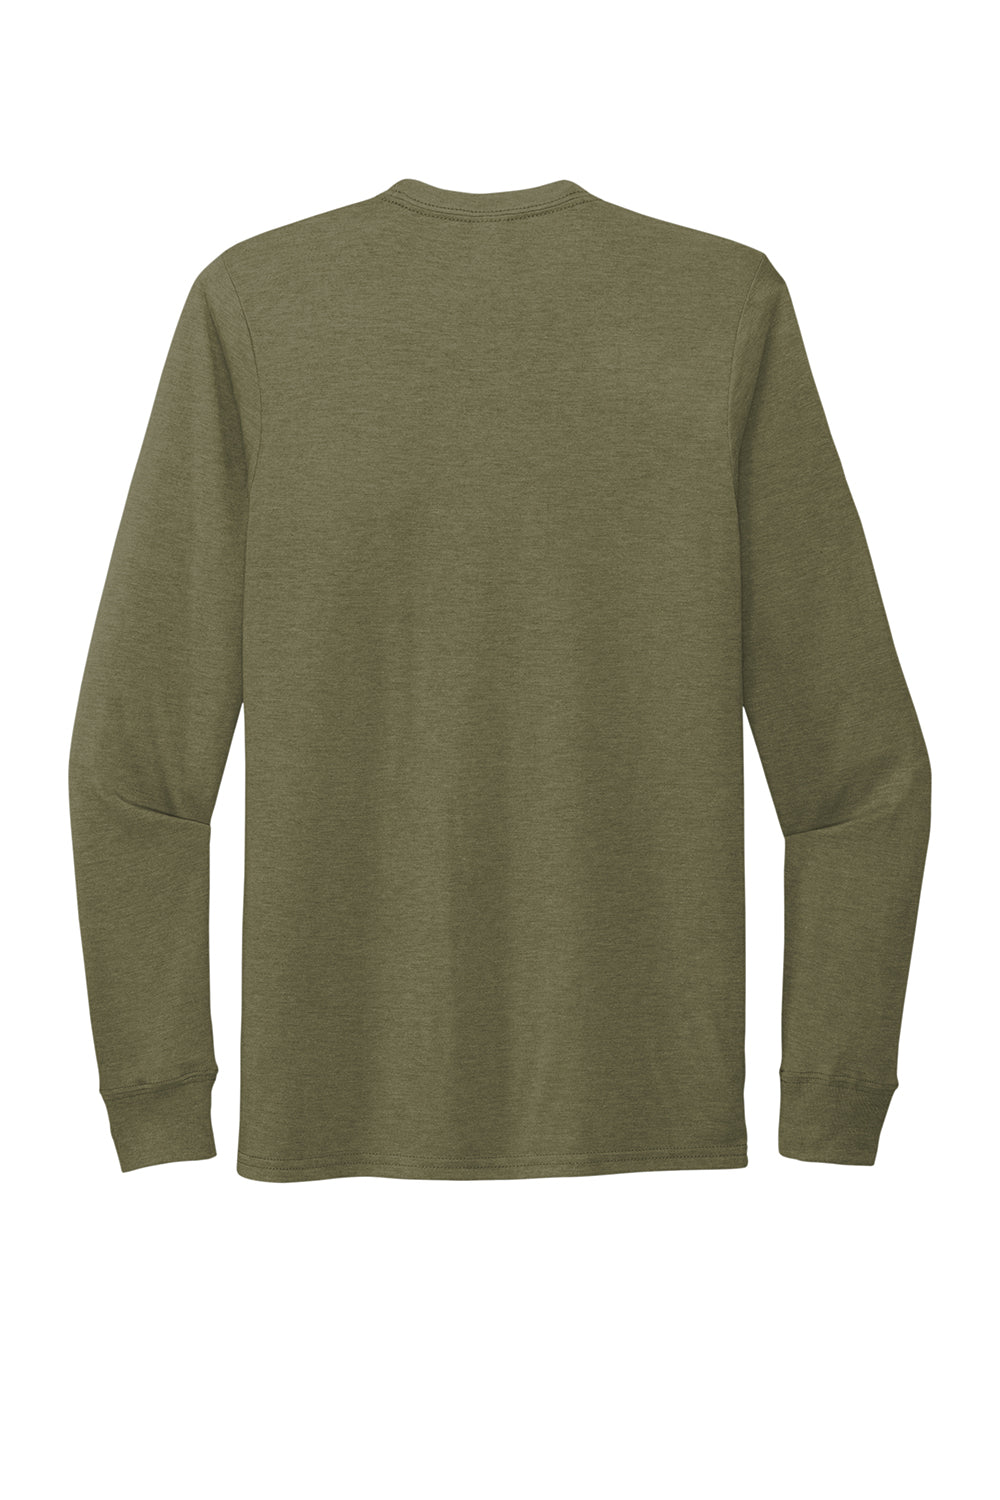 Allmade AL6004 Mens Long Sleeve Crewneck T-Shirt Olive You Green Flat Back